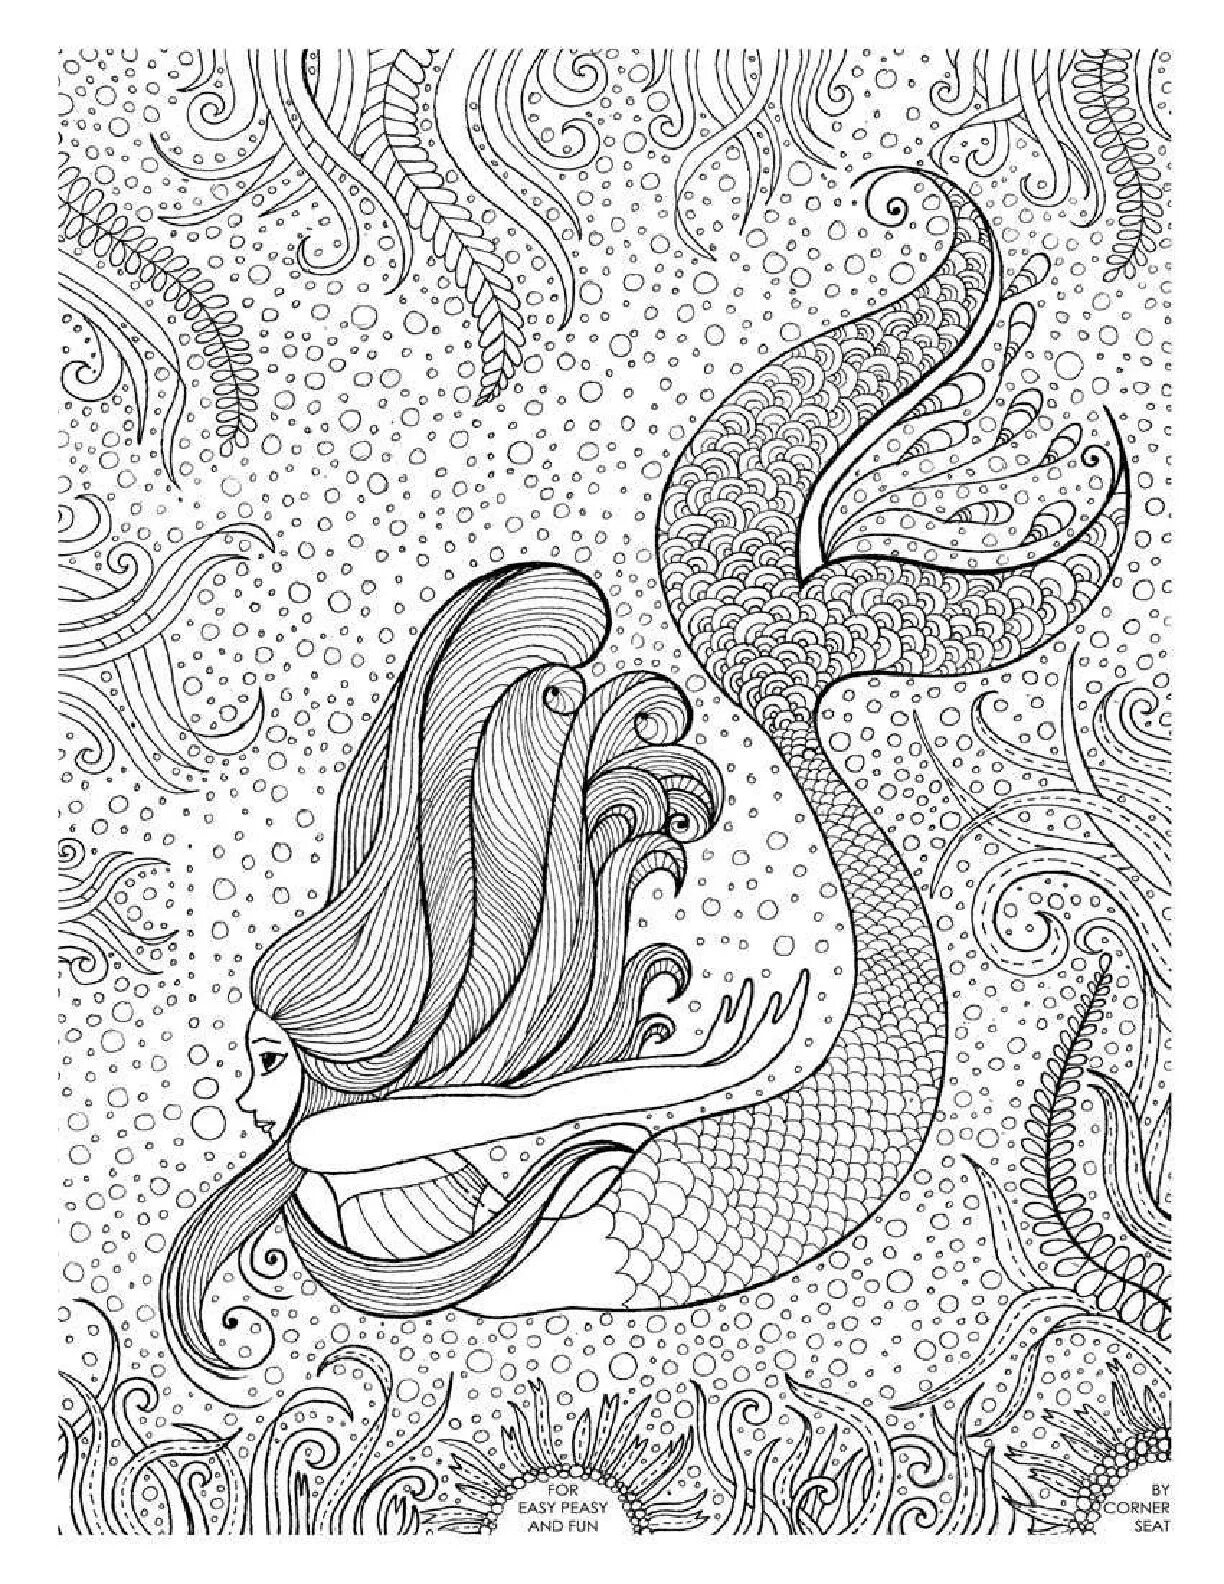 Complex mermaid #1